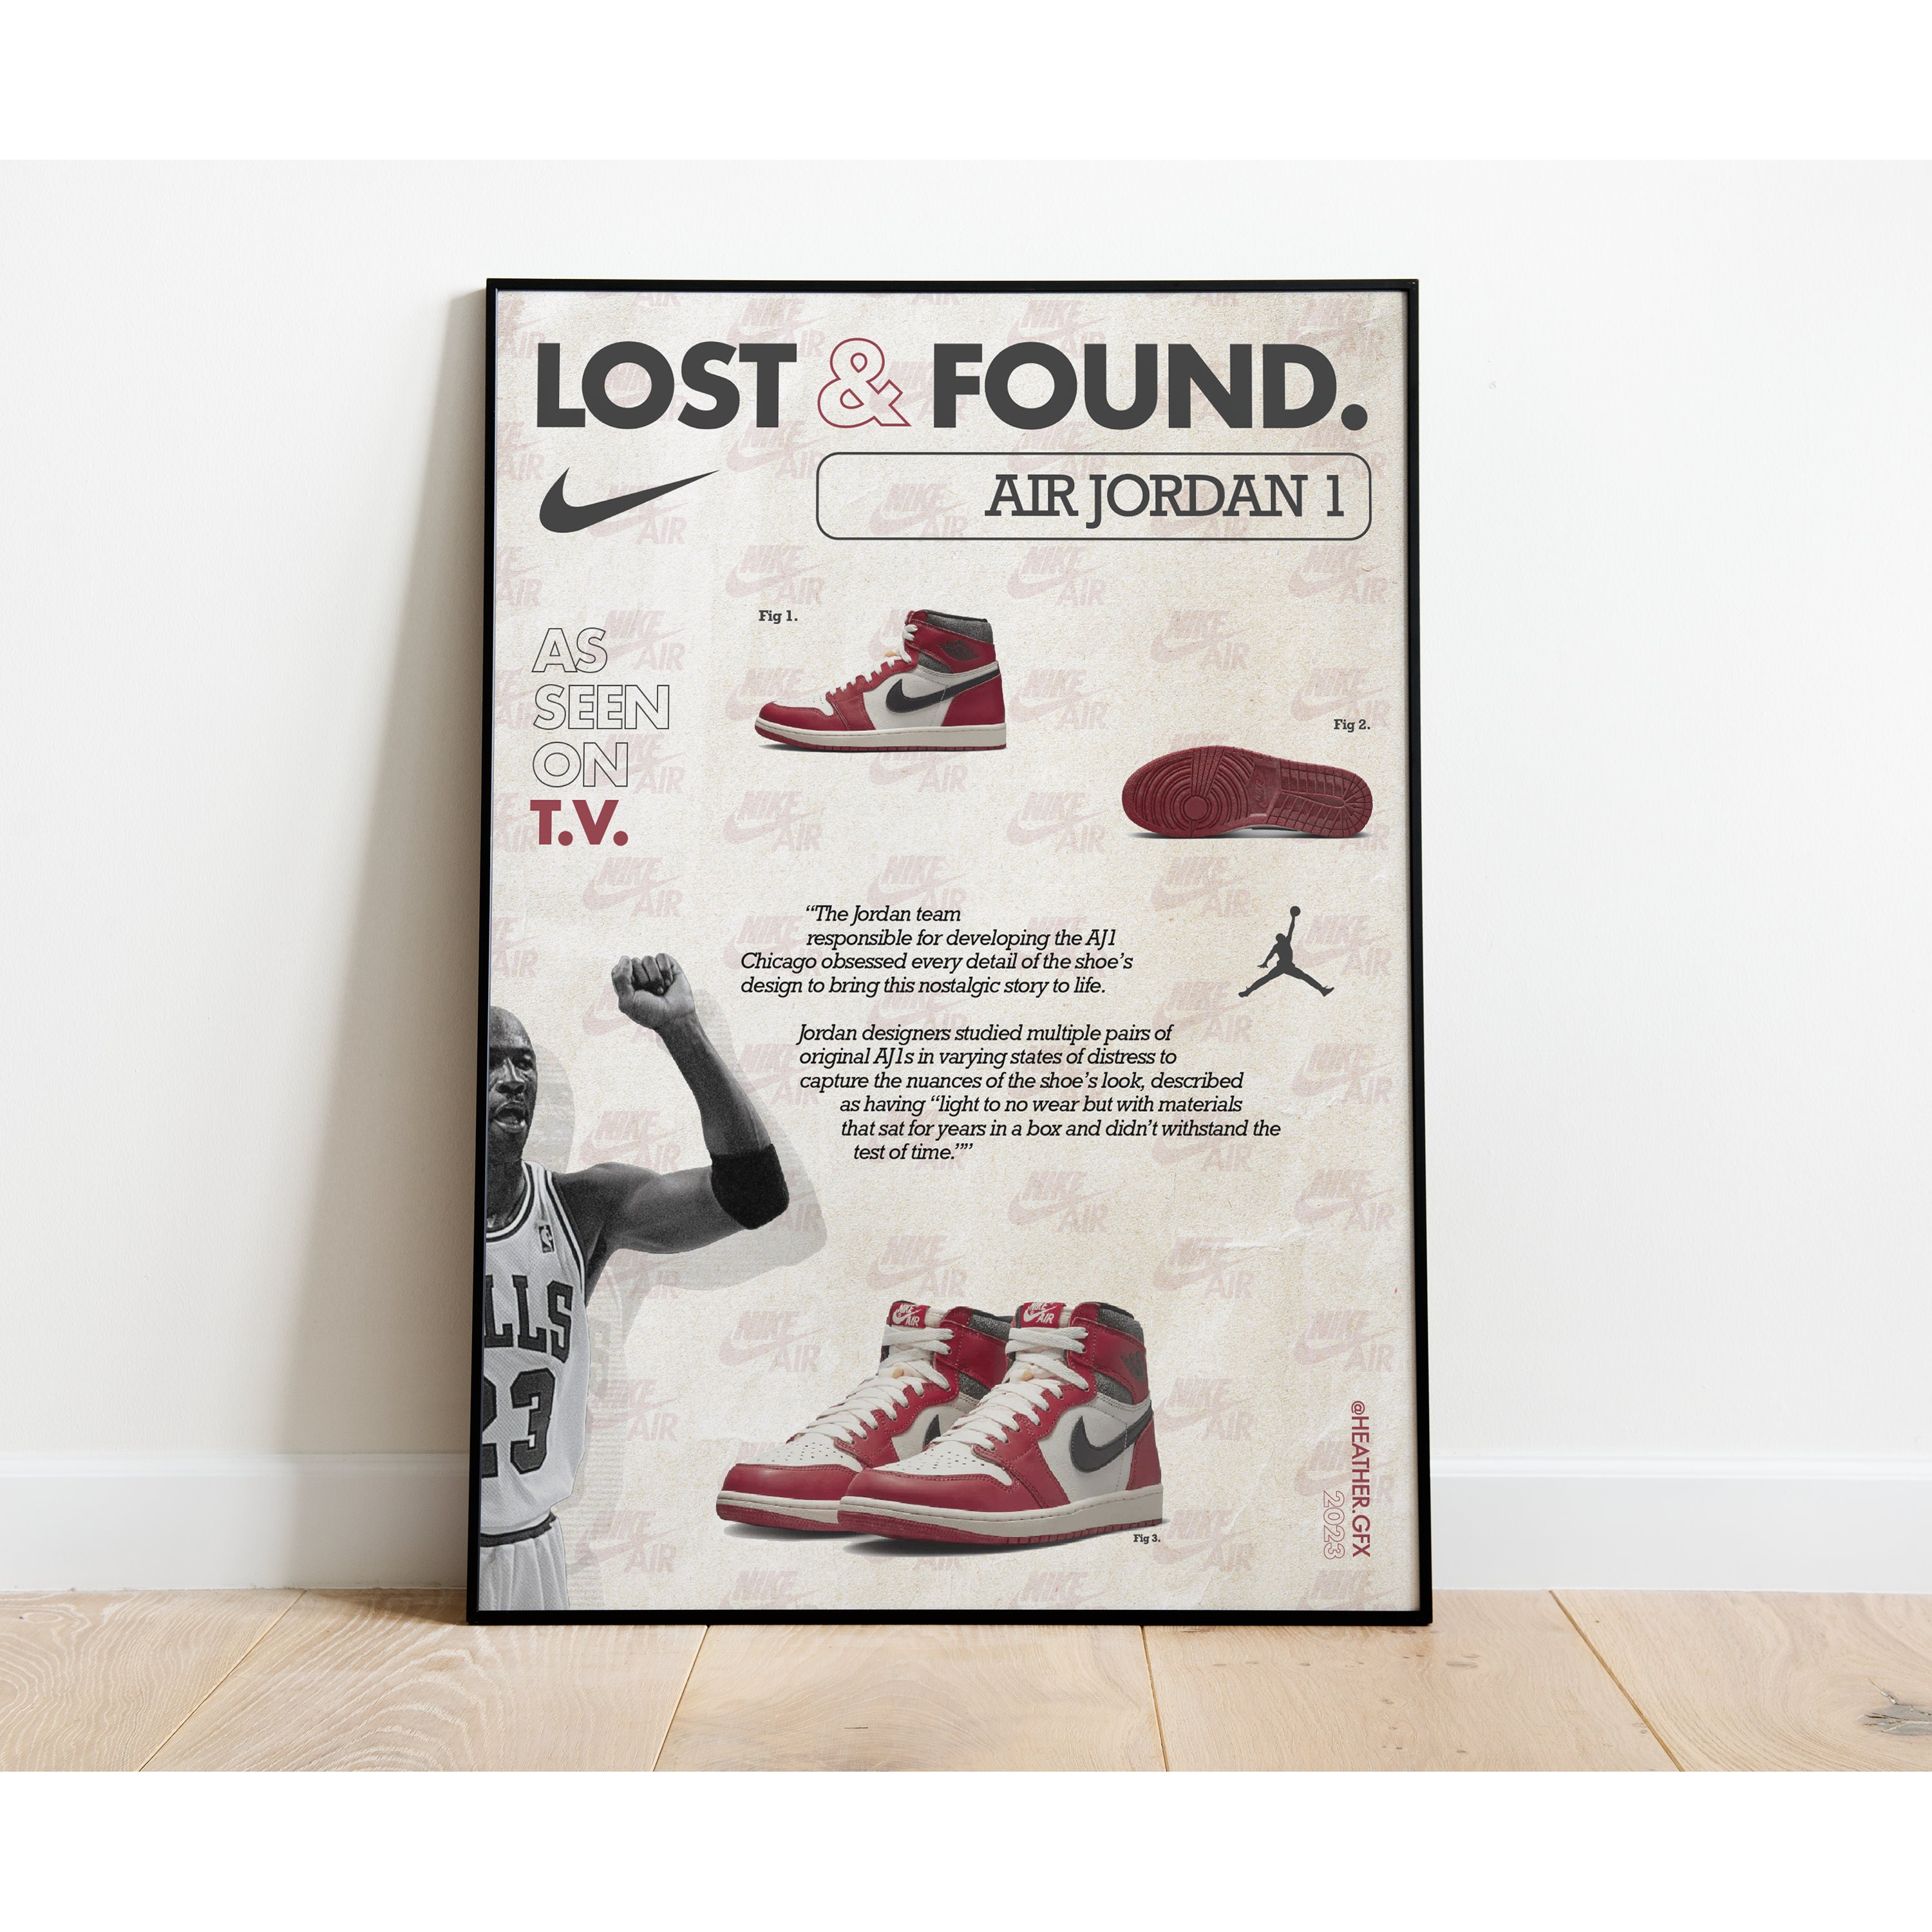 Air Jordan 4 Poster Project : r/graphic_design